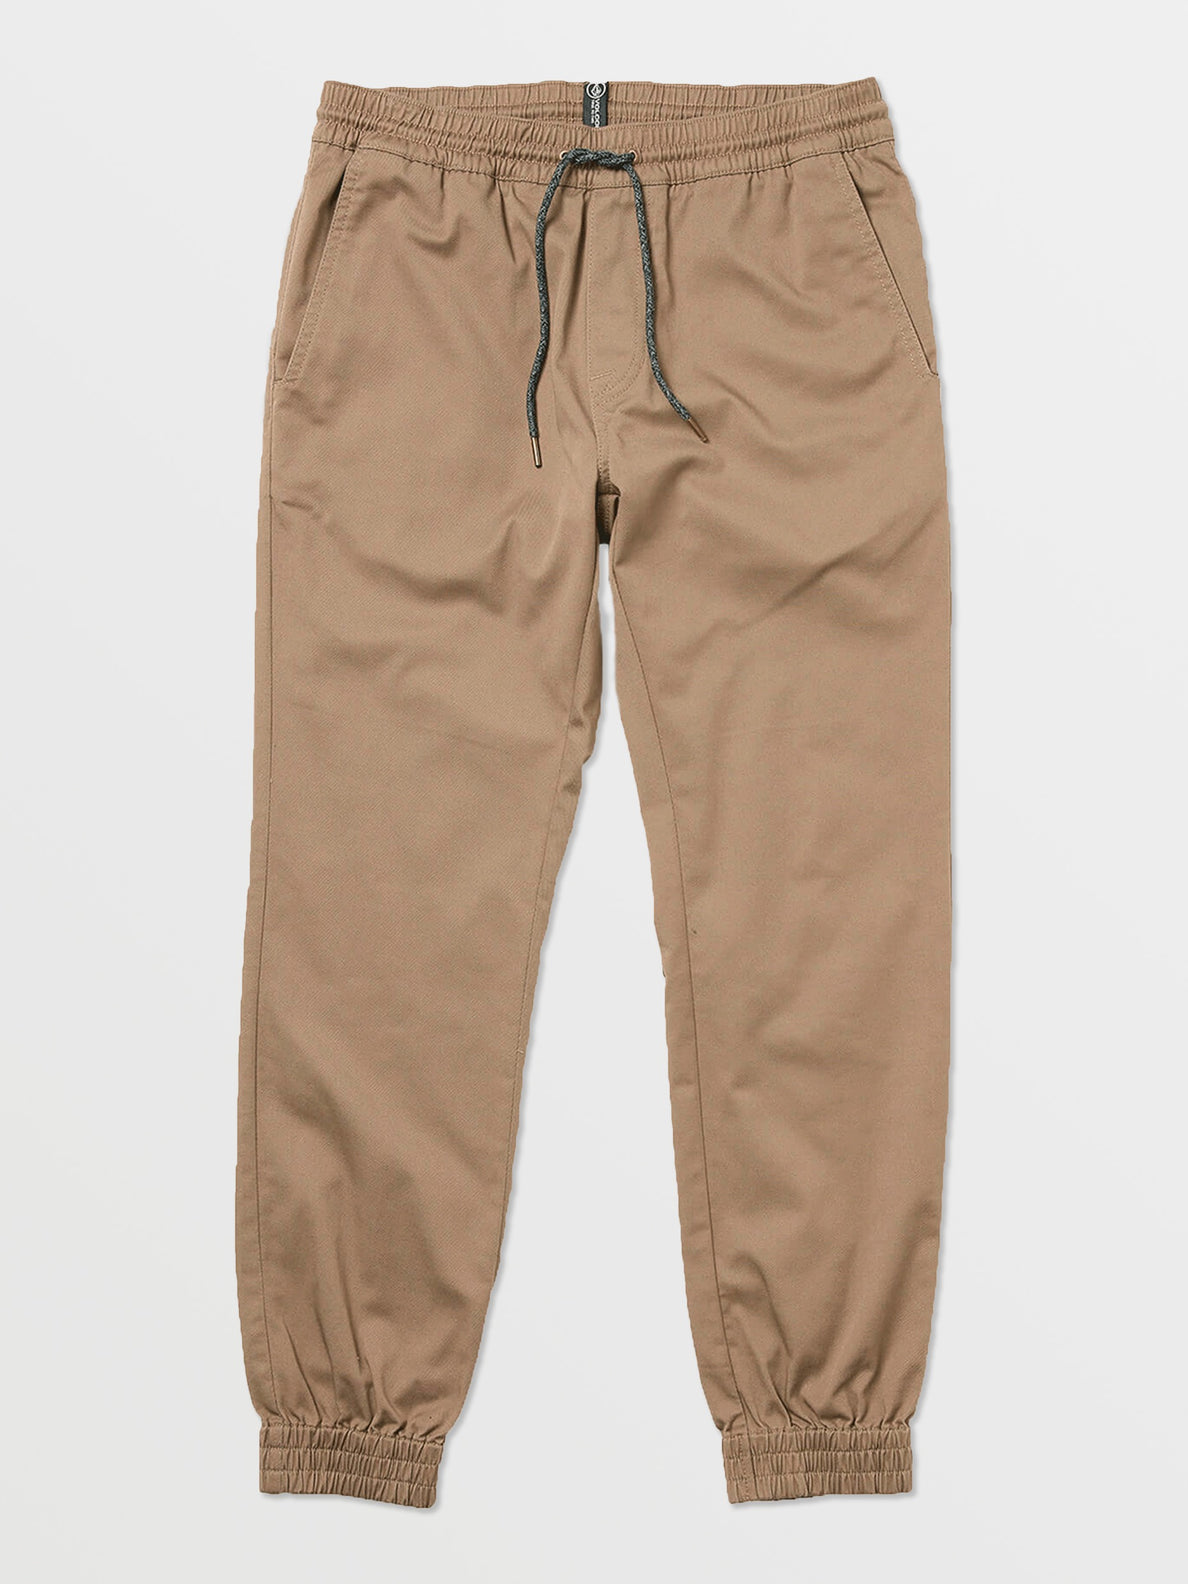 Under Armour khaki jogger pants womens size medium tapered pockets elastic  waist 